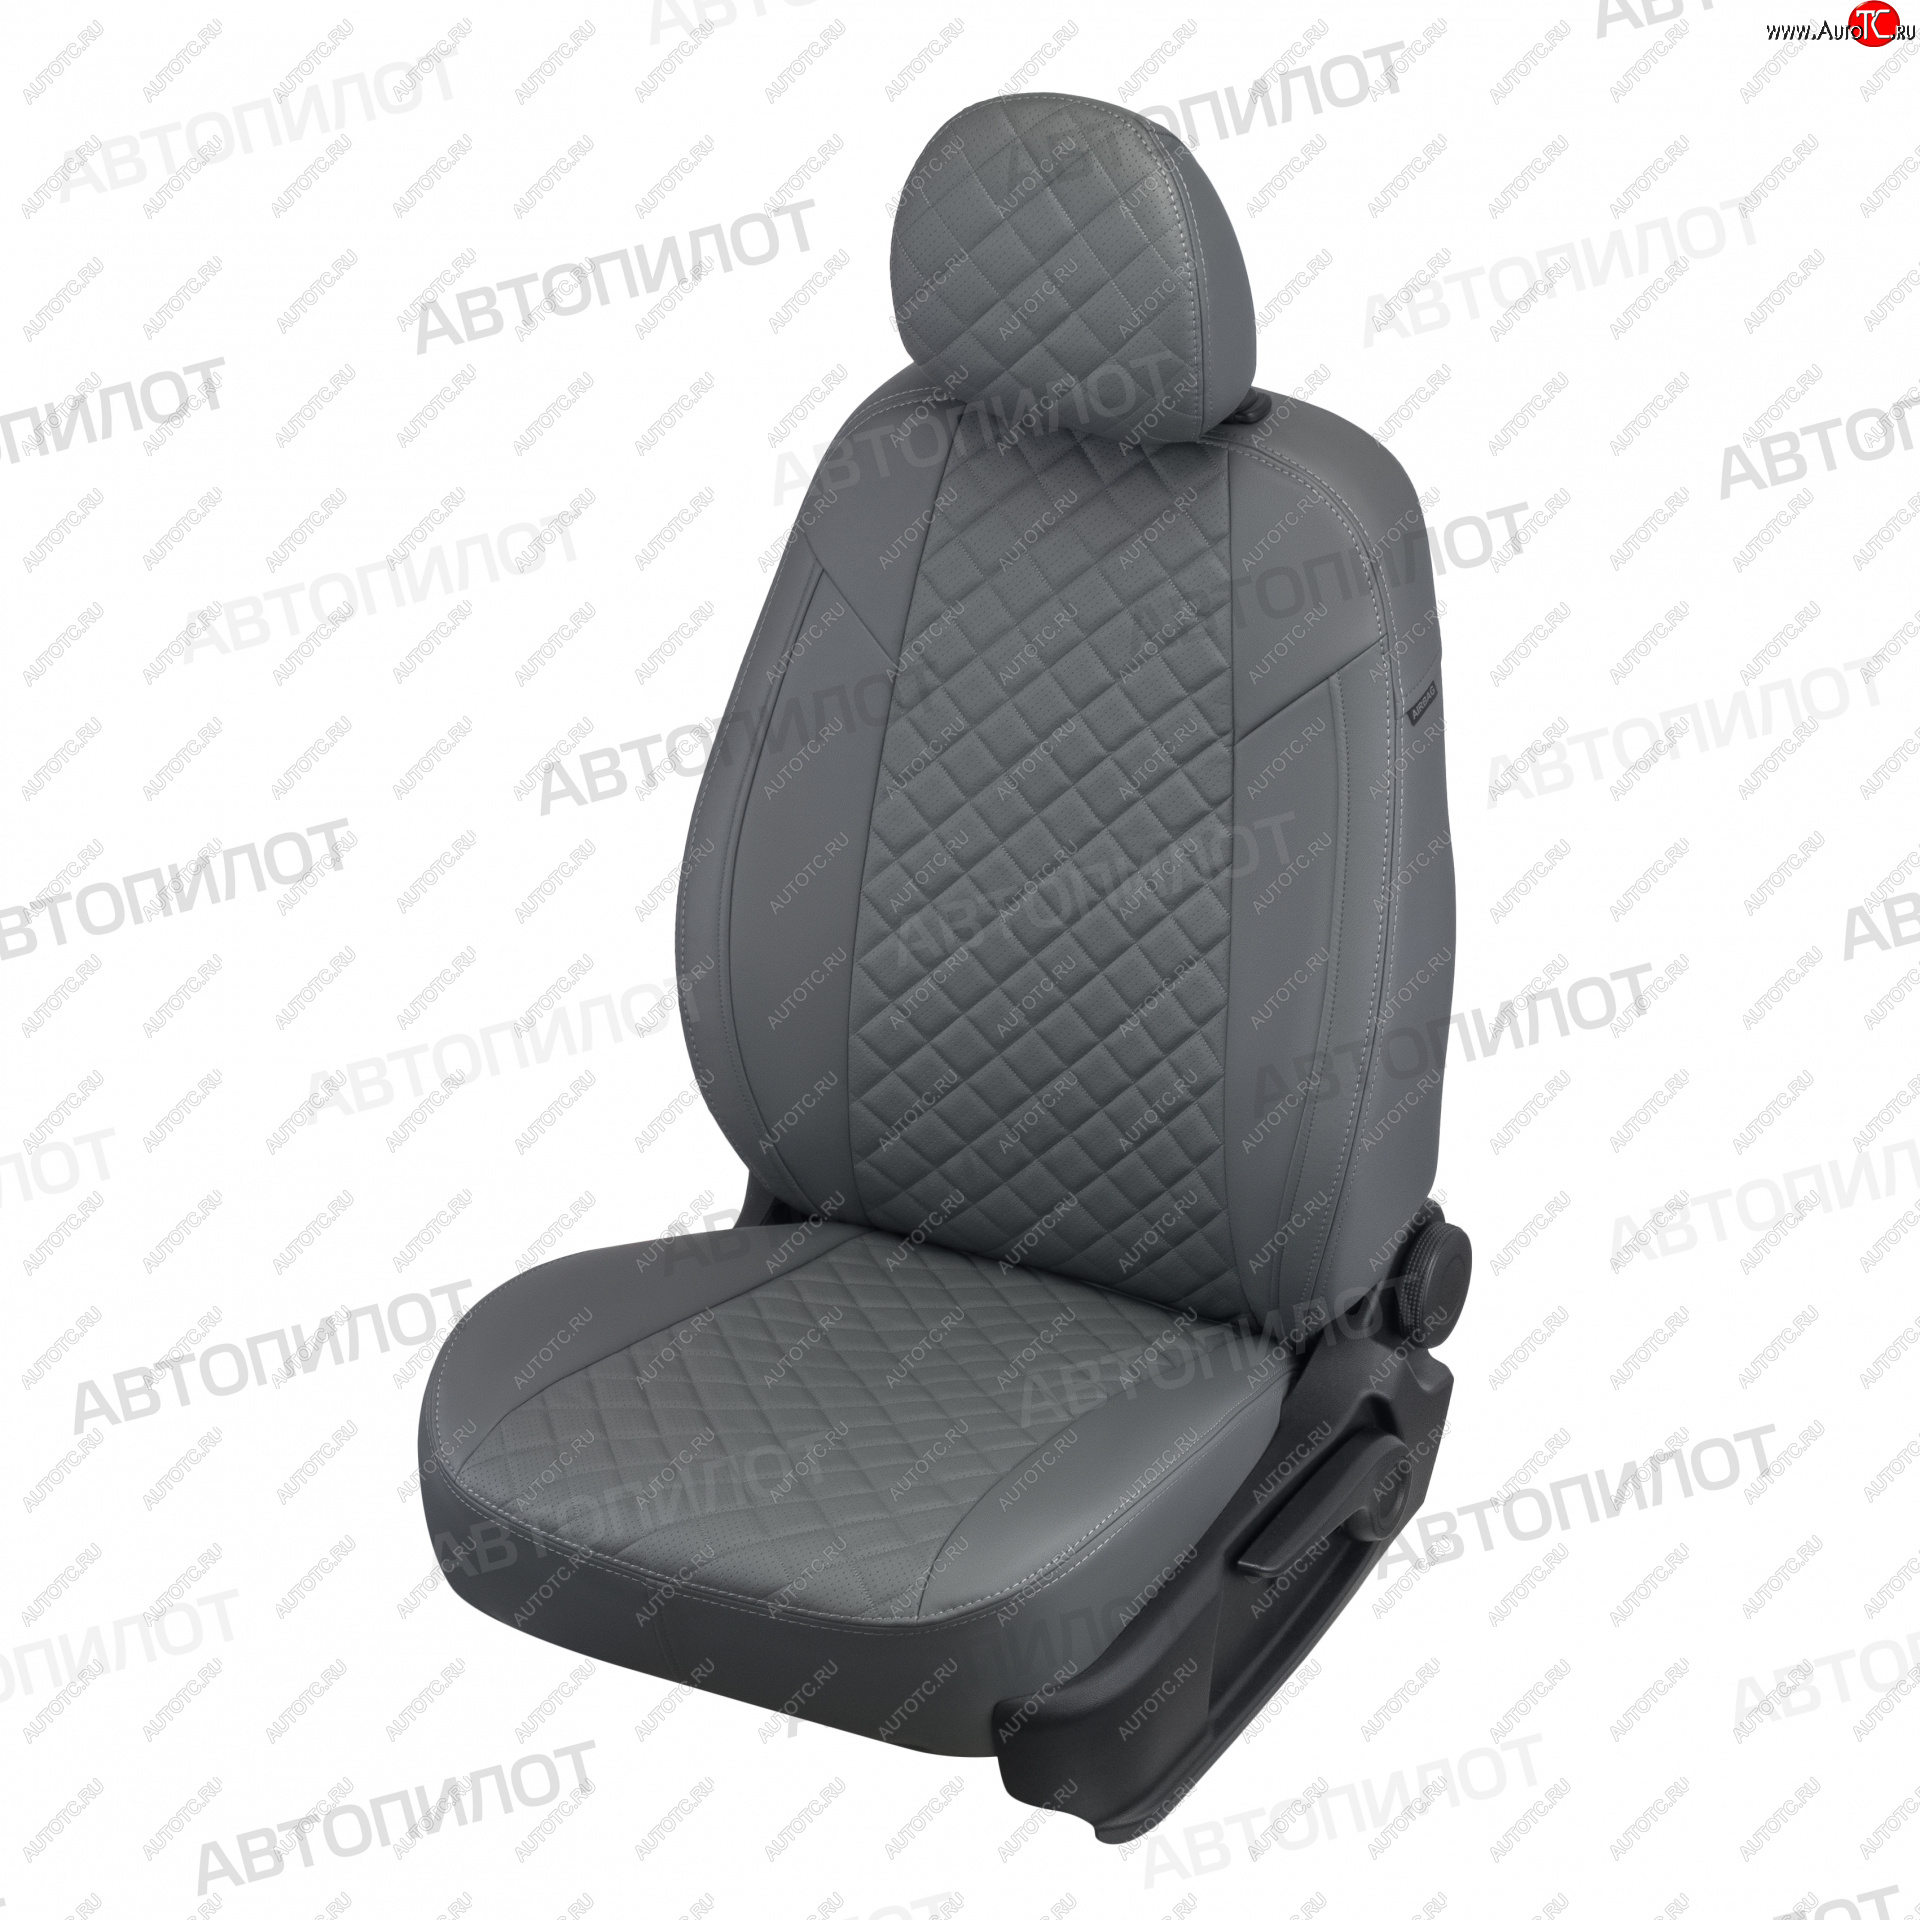 8 699 р. Чехлы сидений (экокожа, 3 места) Автопилот Ромб  Hyundai HD-72 - HD78 (серый)